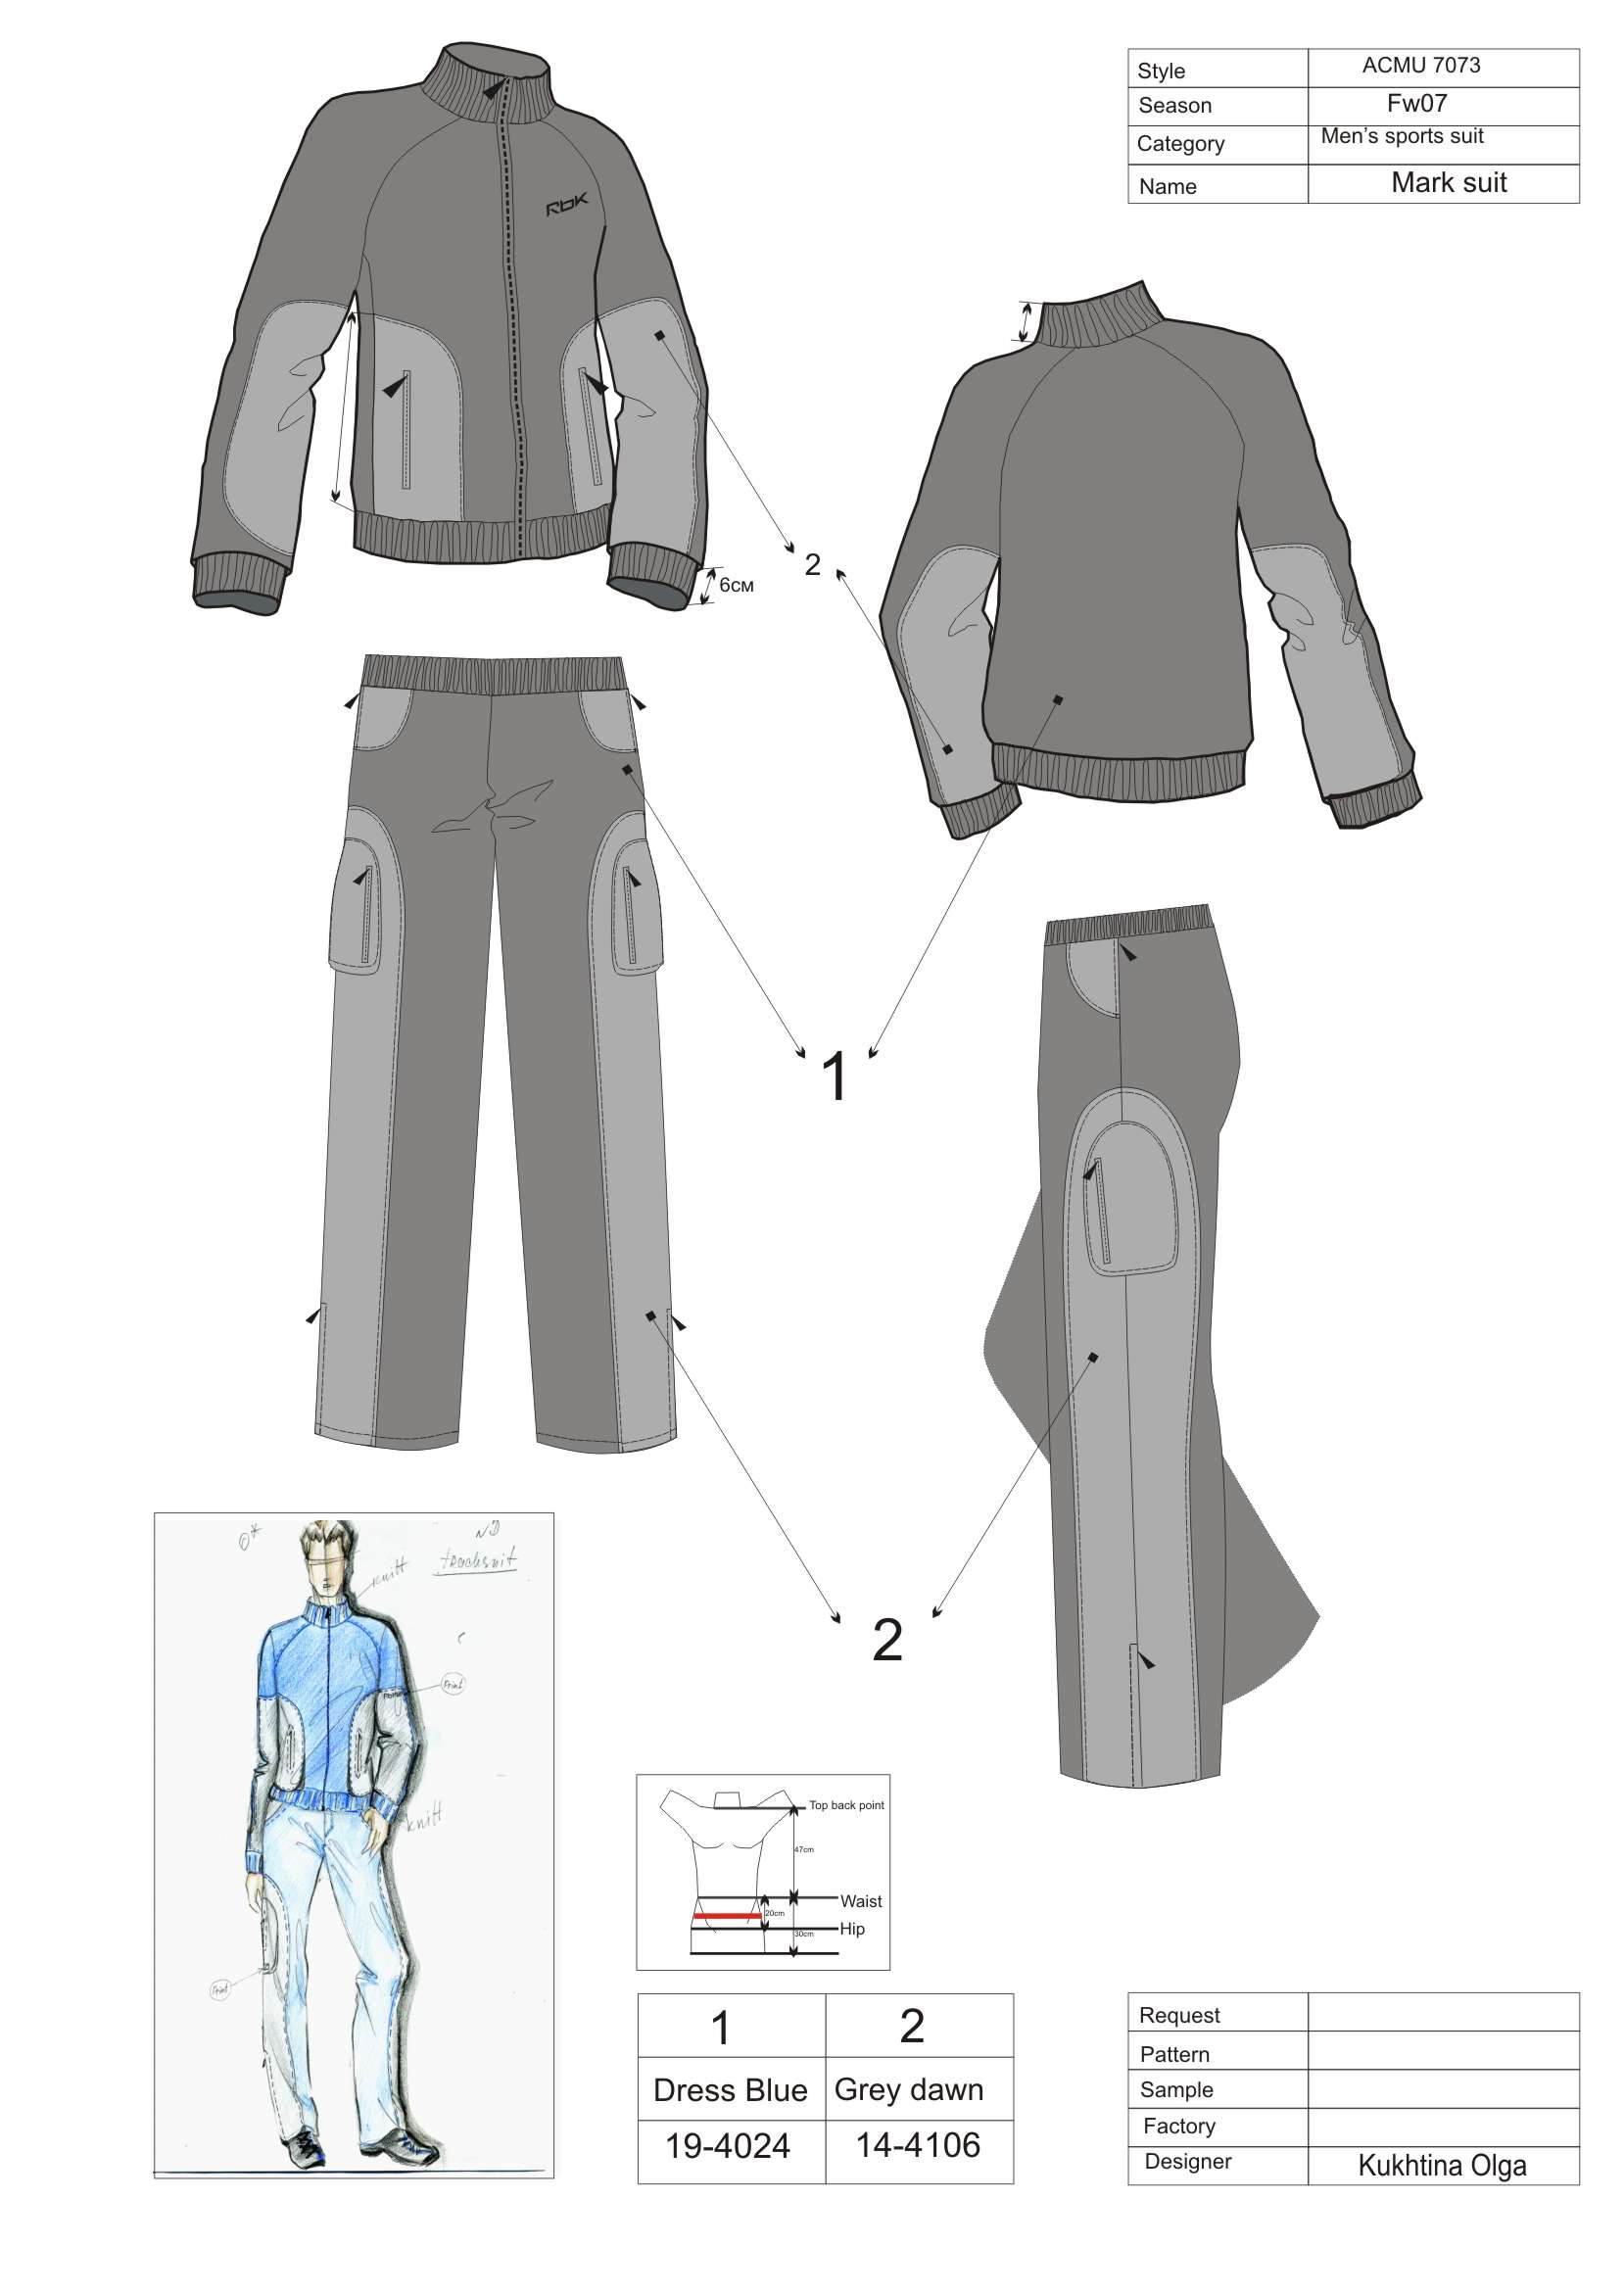 Технический эскиз спорт. костюма из коллеции FW 06/07 для RBK